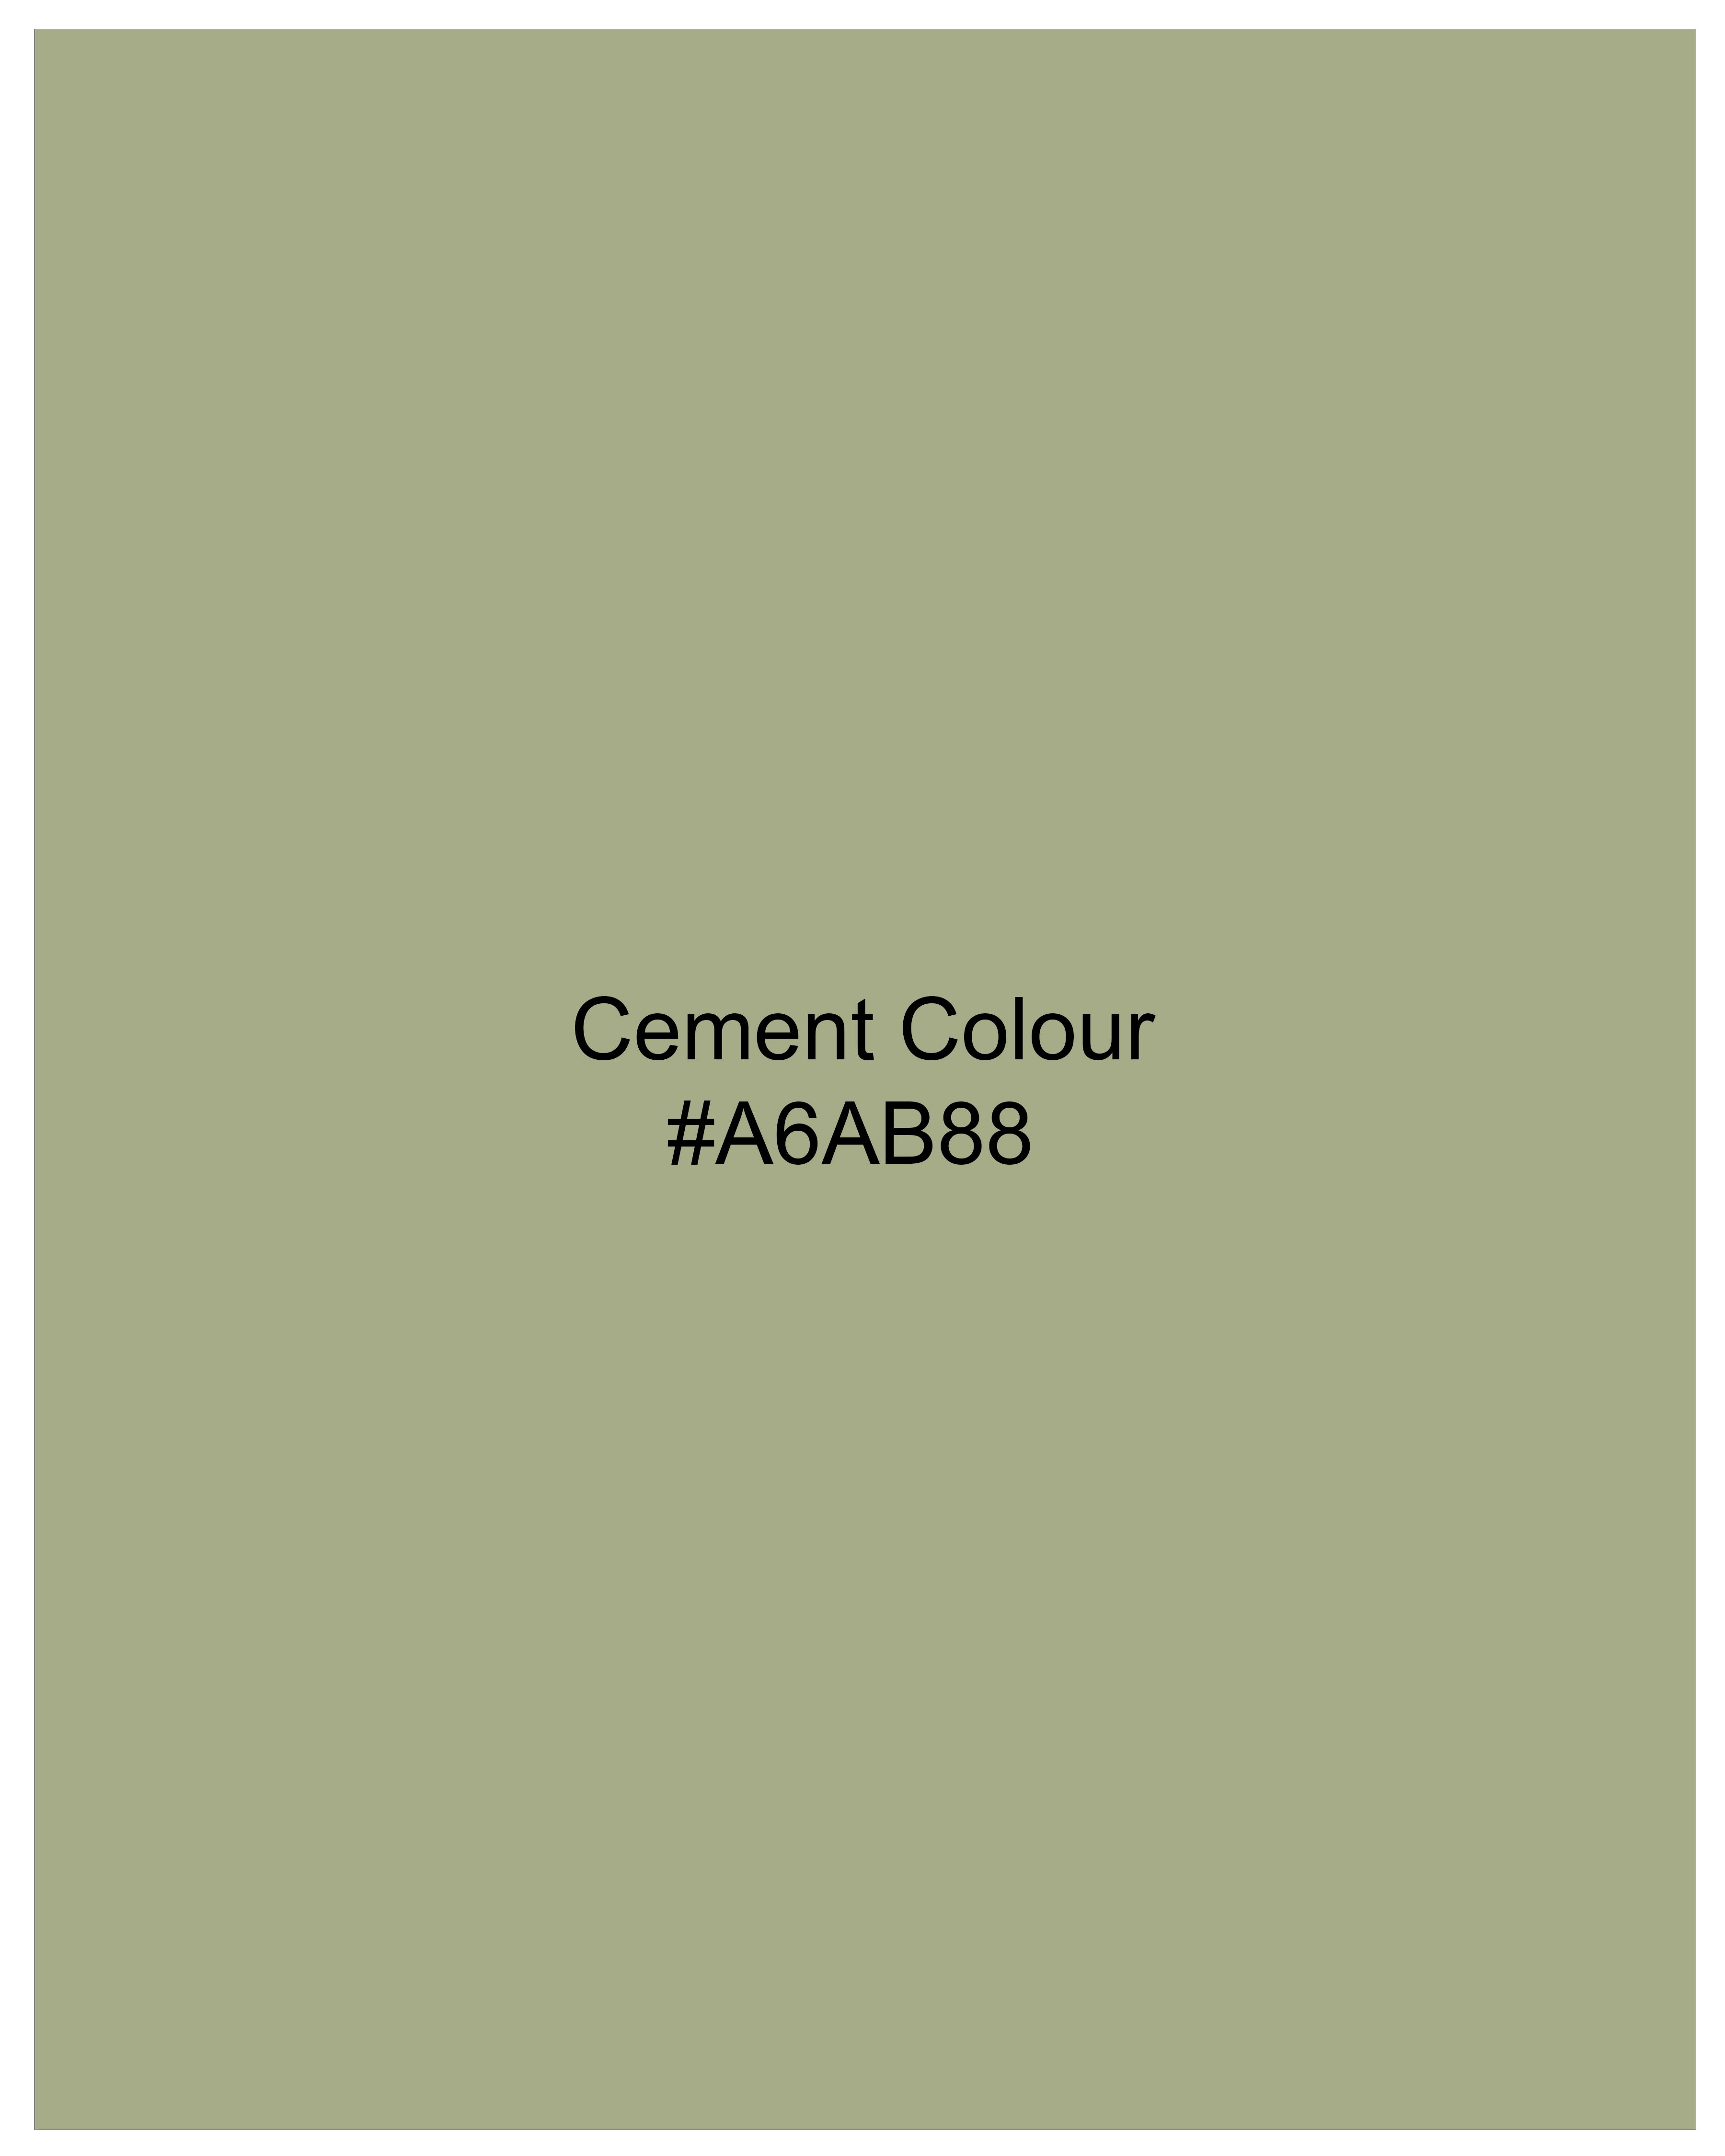 Cement Green Embroidered Super Soft Premium Cotton Shirt 9821-M-GR-38, 9821-M-GR-H-38, 9821-M-GR-39, 9821-M-GR-H-39, 9821-M-GR-40, 9821-M-GR-H-40, 9821-M-GR-42, 9821-M-GR-H-42, 9821-M-GR-44, 9821-M-GR-H-44, 9821-M-GR-46, 9821-M-GR-H-46, 9821-M-GR-48, 9821-M-GR-H-48, 9821-M-GR-50, 9821-M-GR-H-50, 9821-M-GR-52, 9821-M-GR-H-52